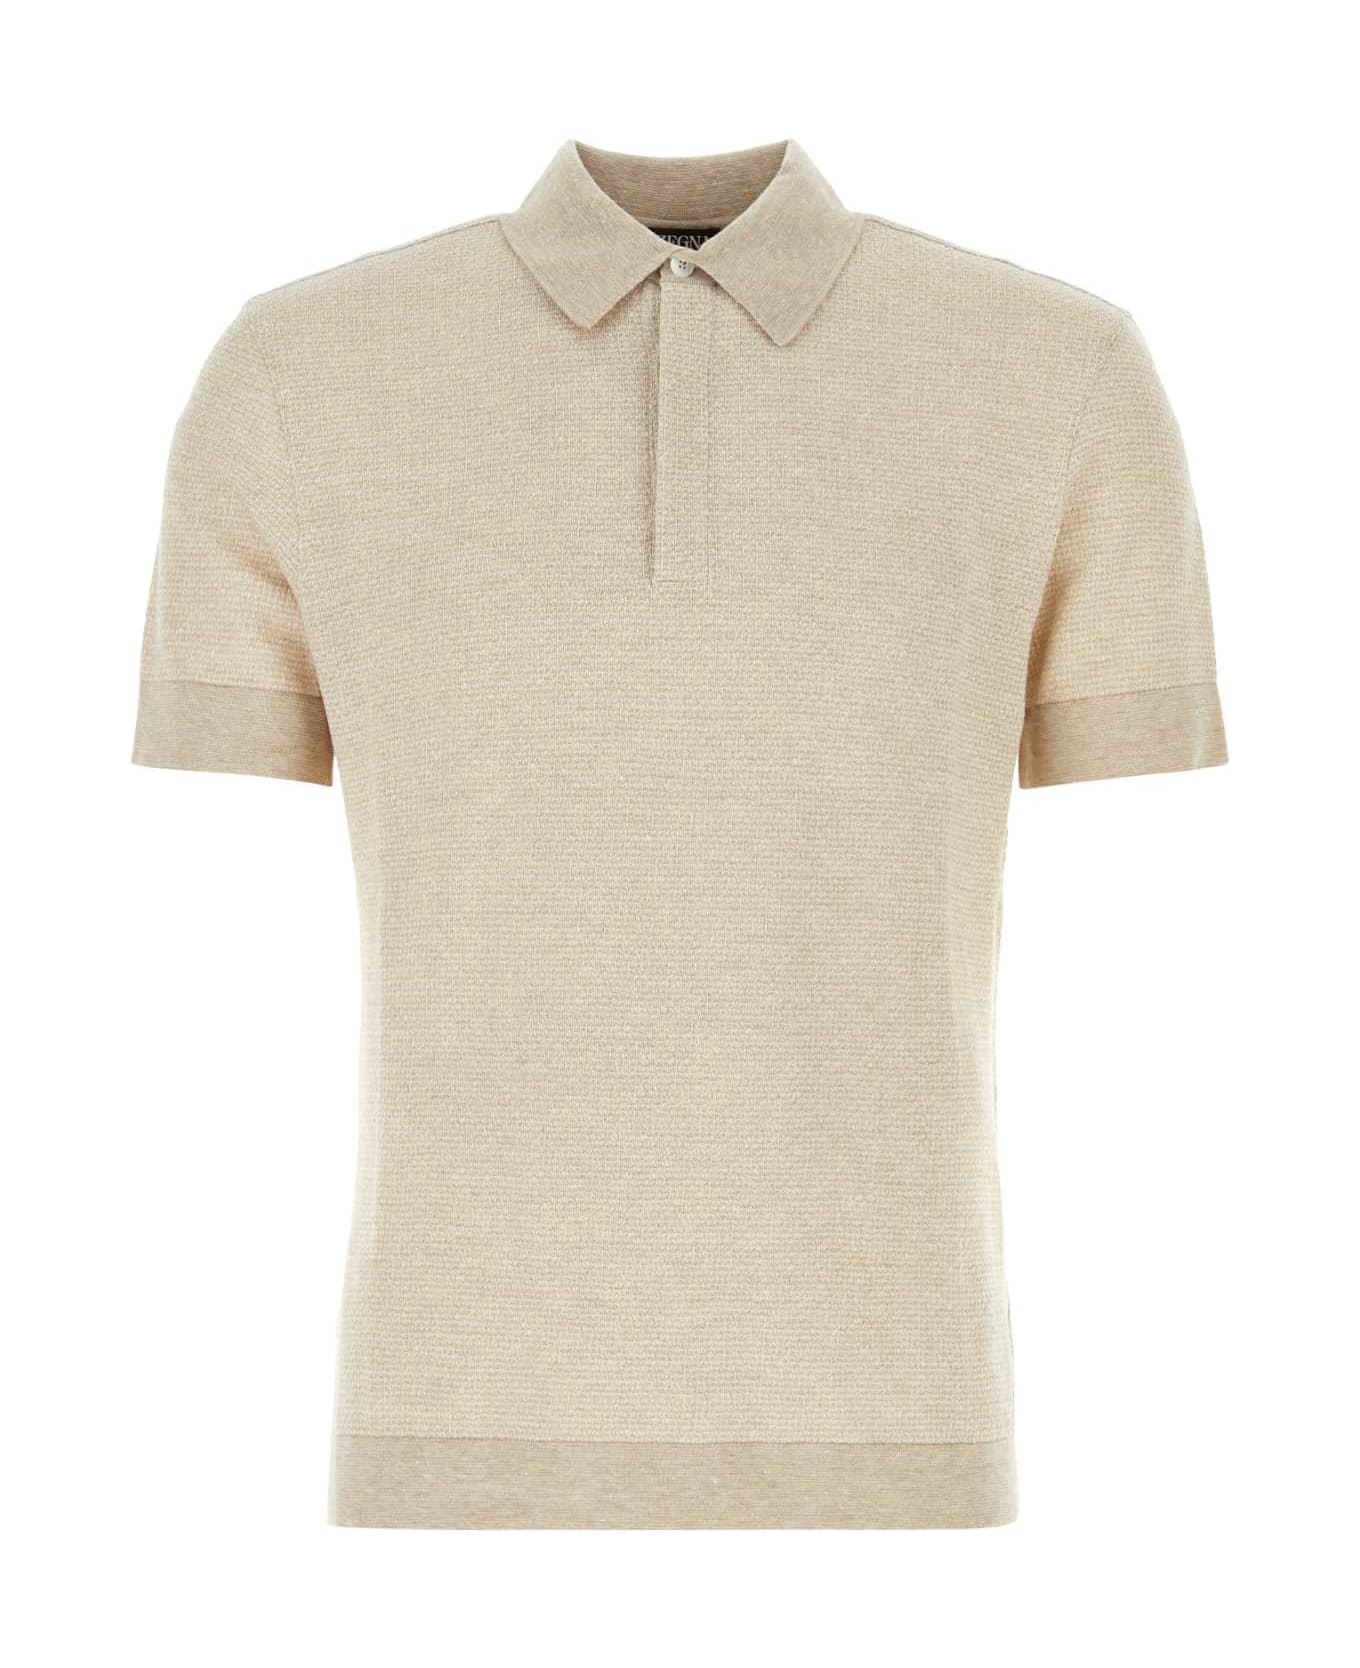 Zegna Sand Cotton Blend Polo Shirt - N03 ポロシャツ